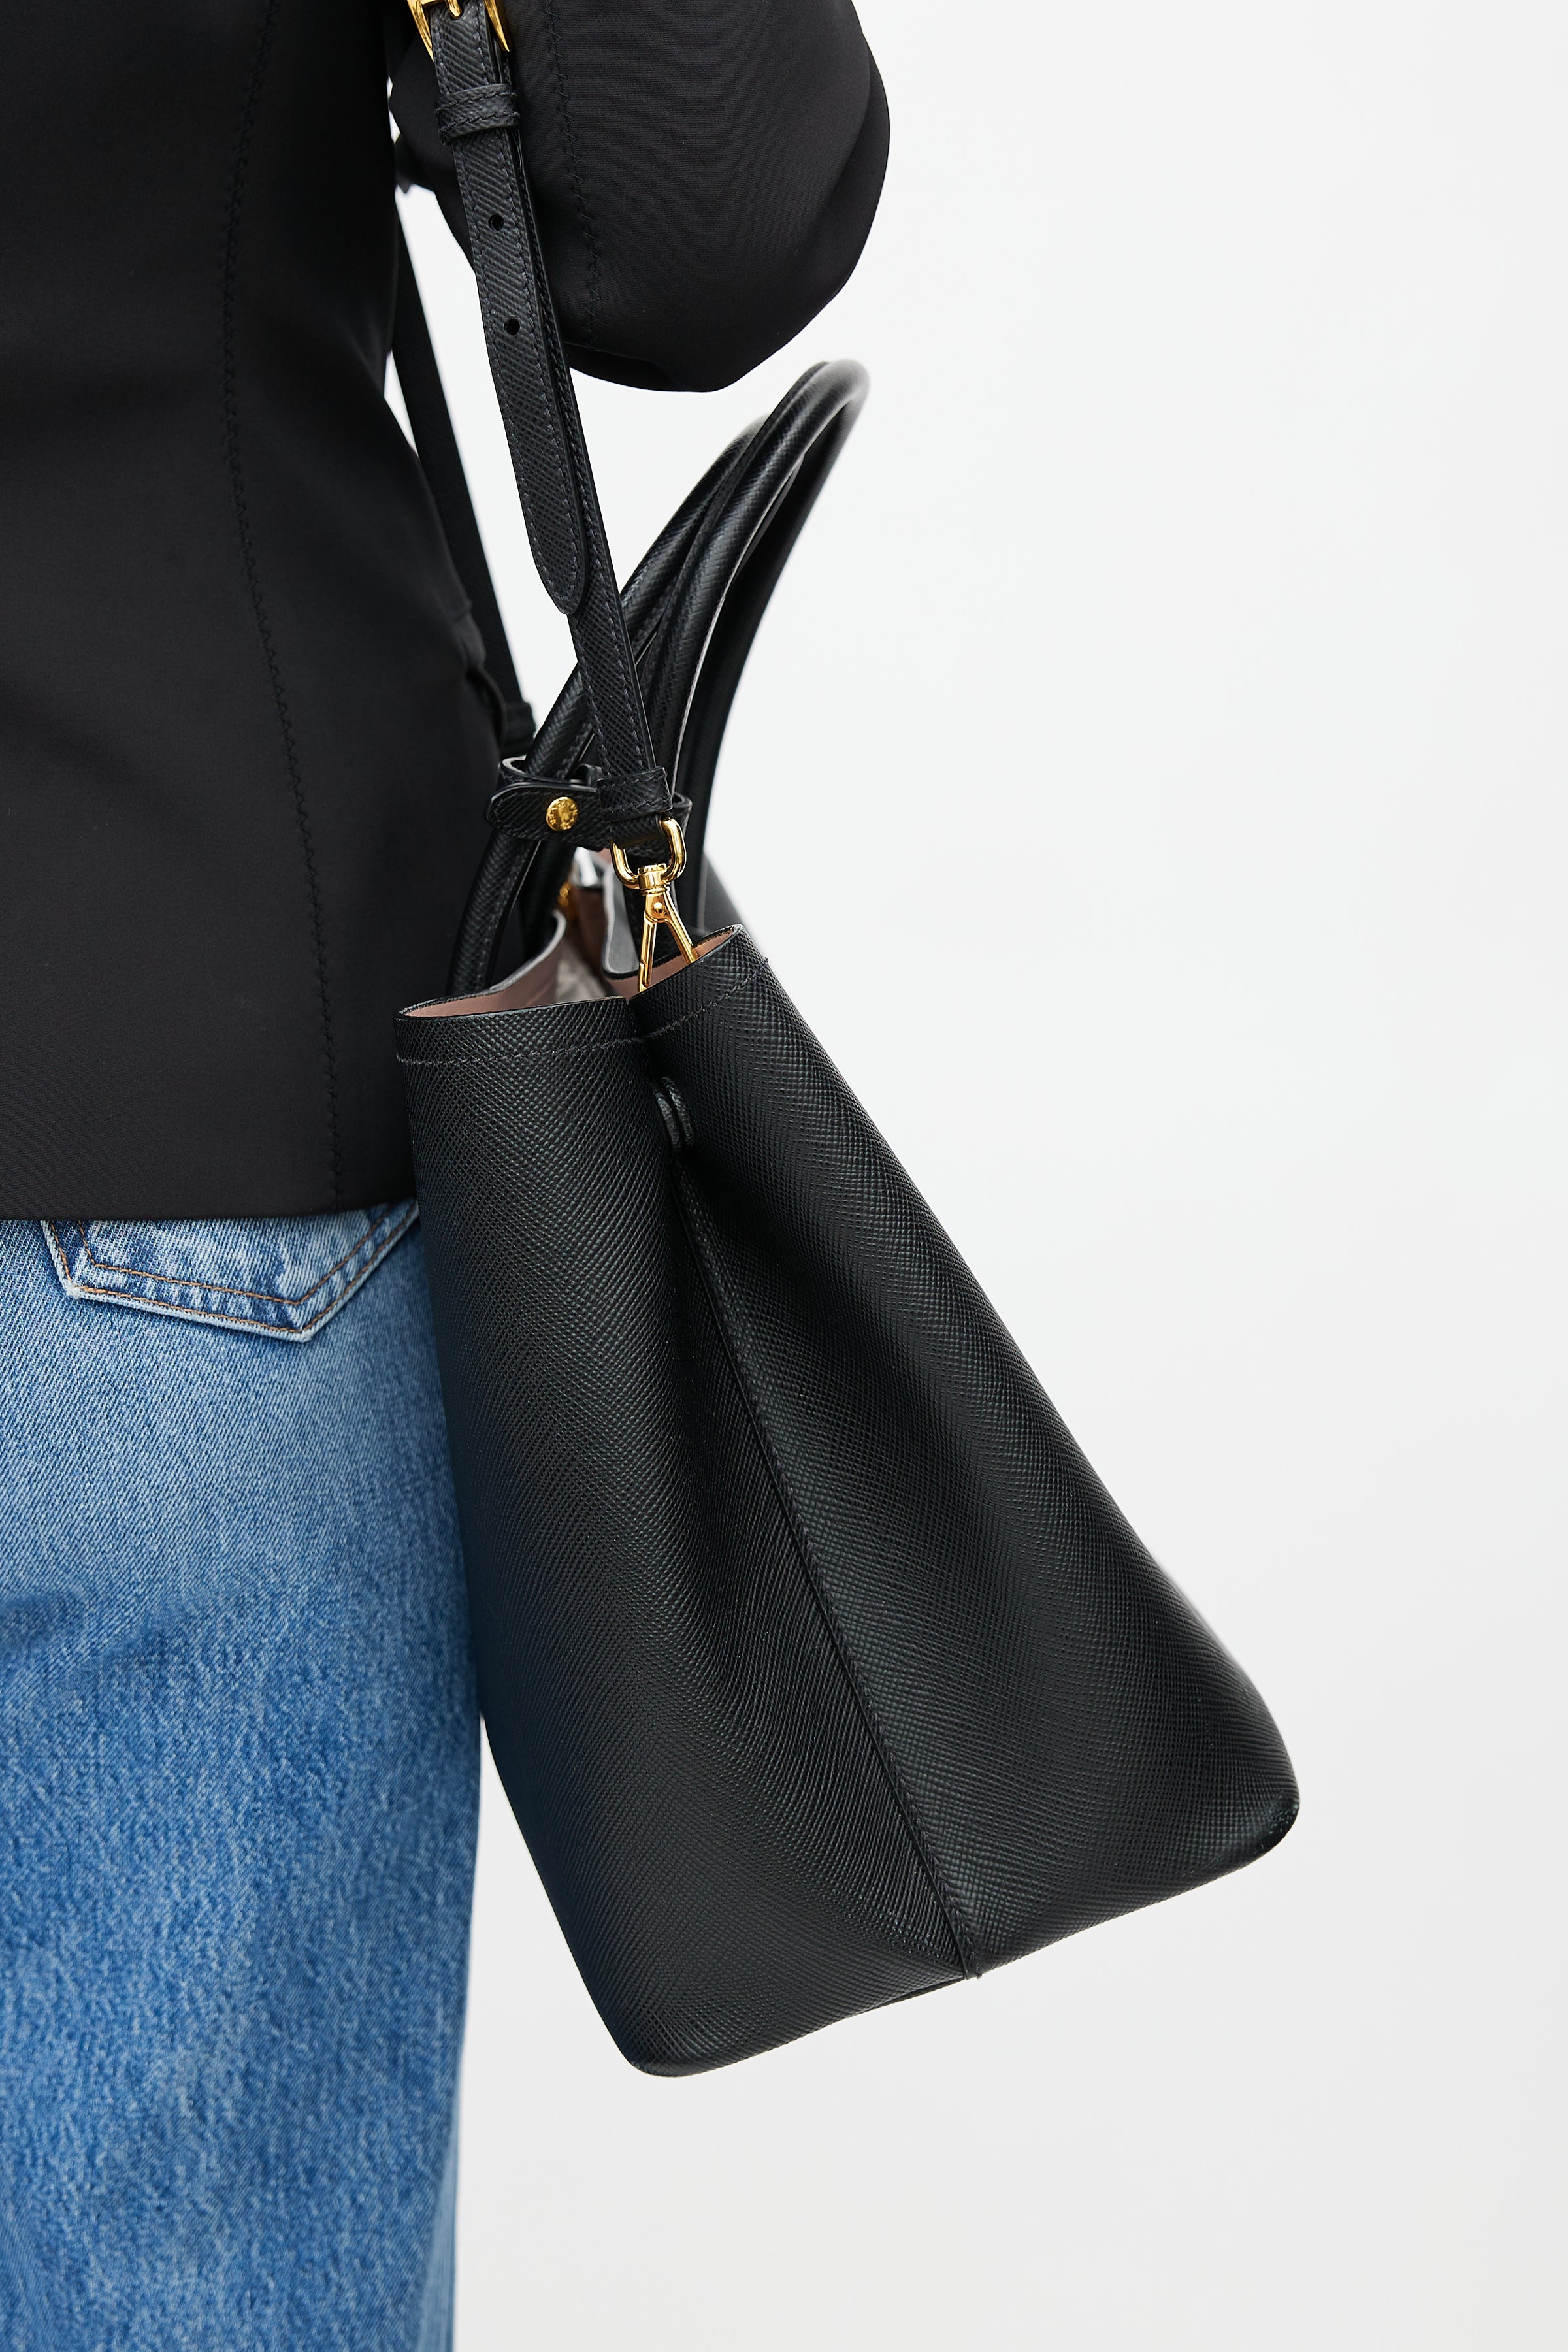 Prada // Taupe Saffiano Leather Galleria Bag – VSP Consignment